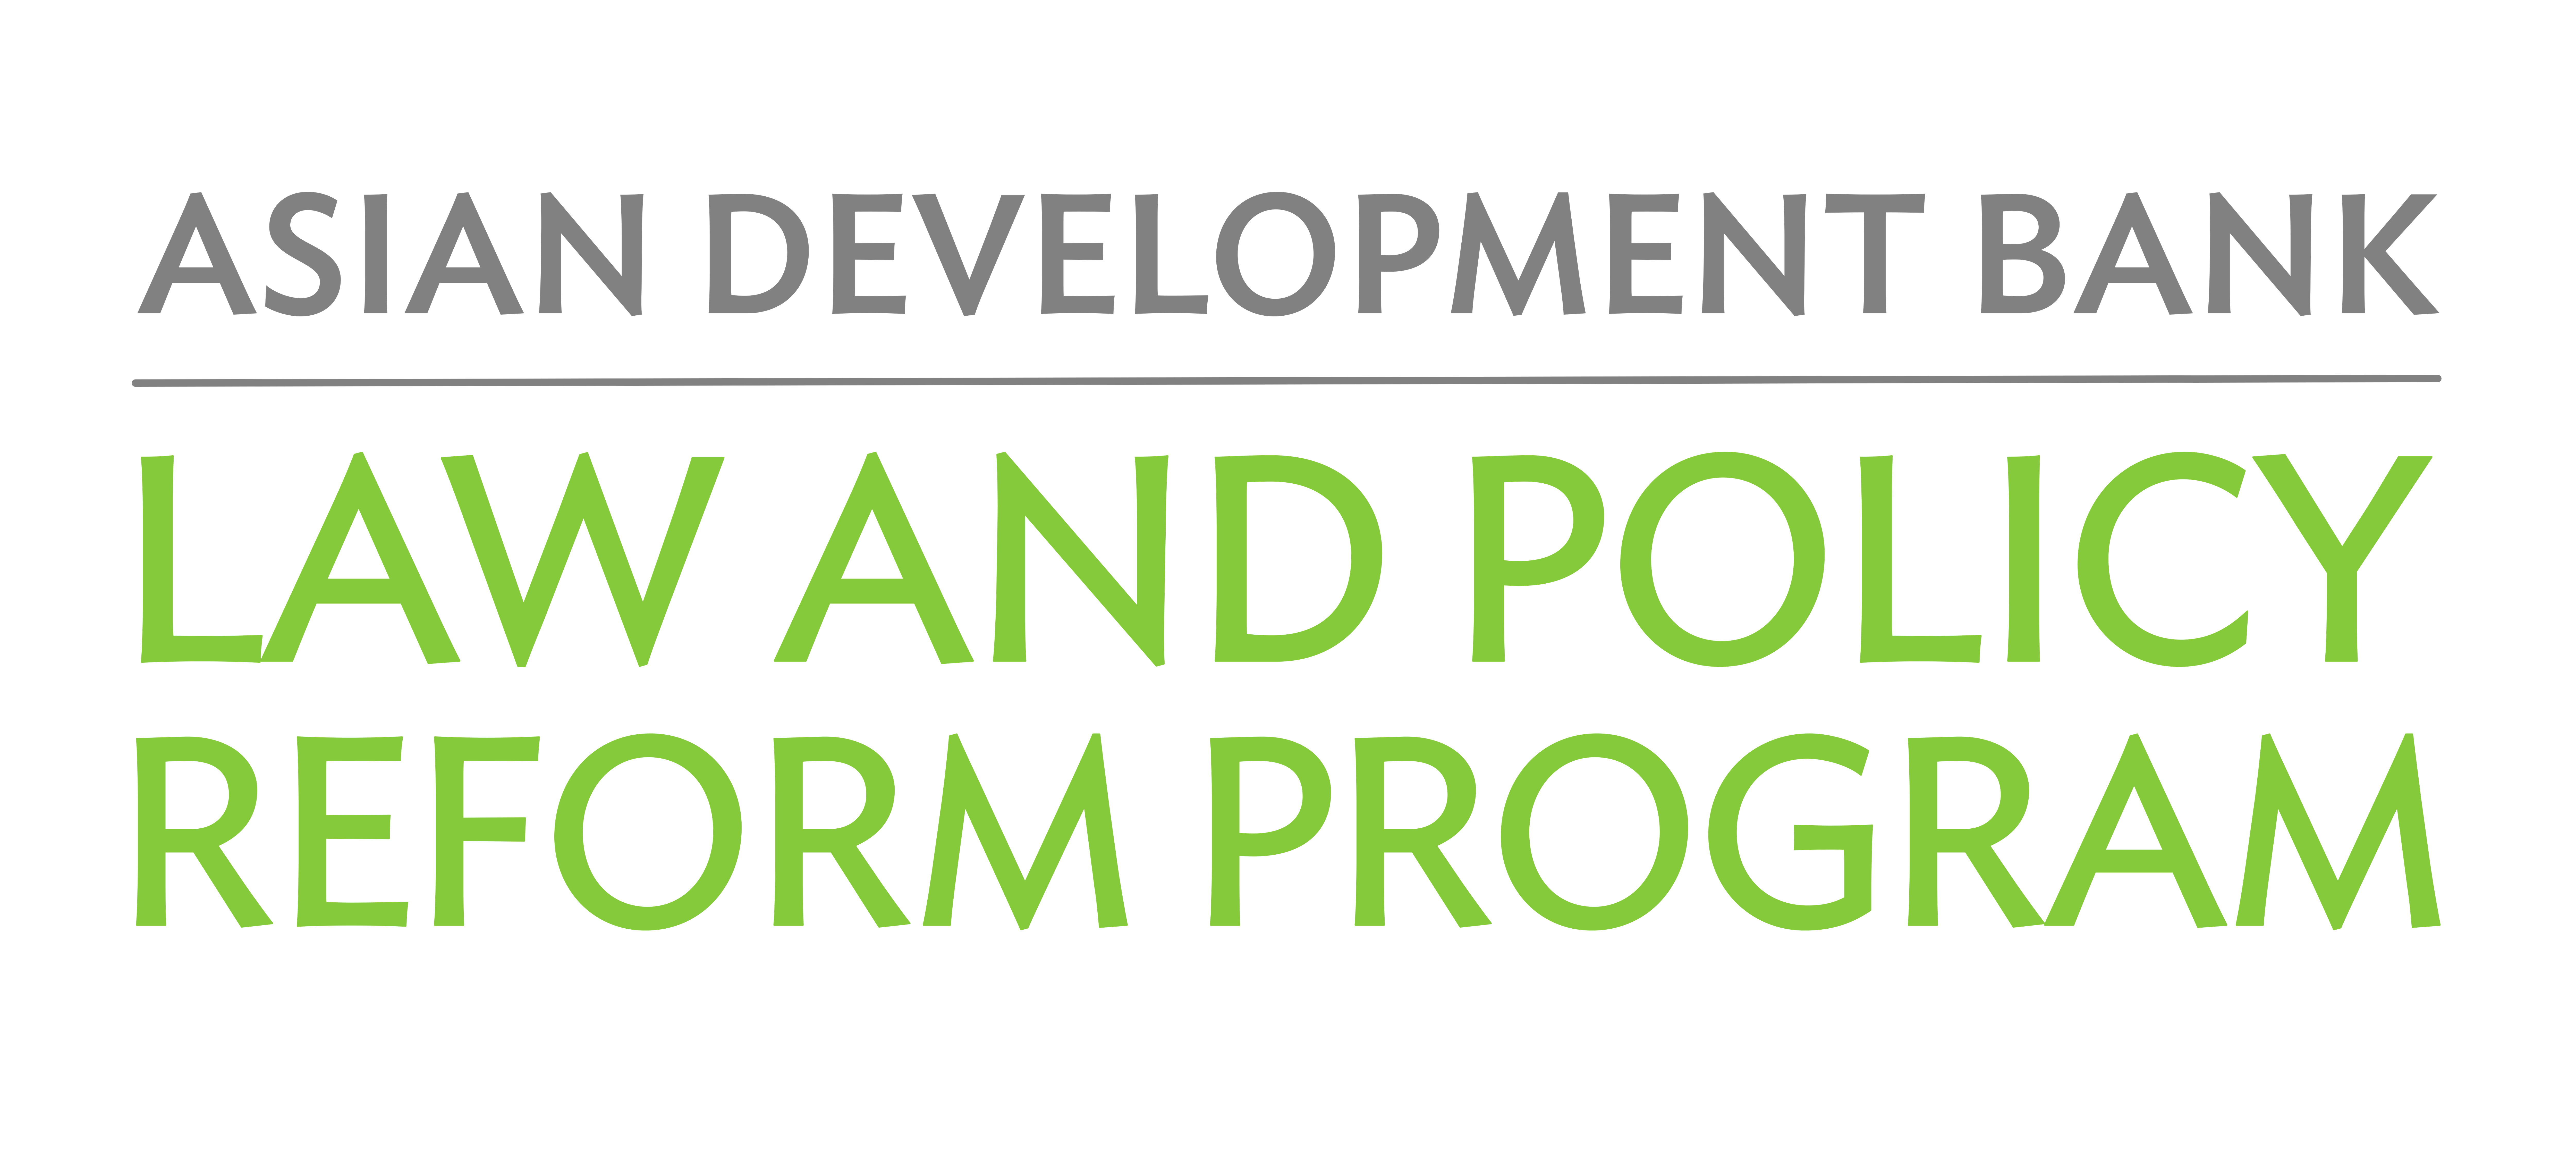 ADB Law and Policy Reform Program